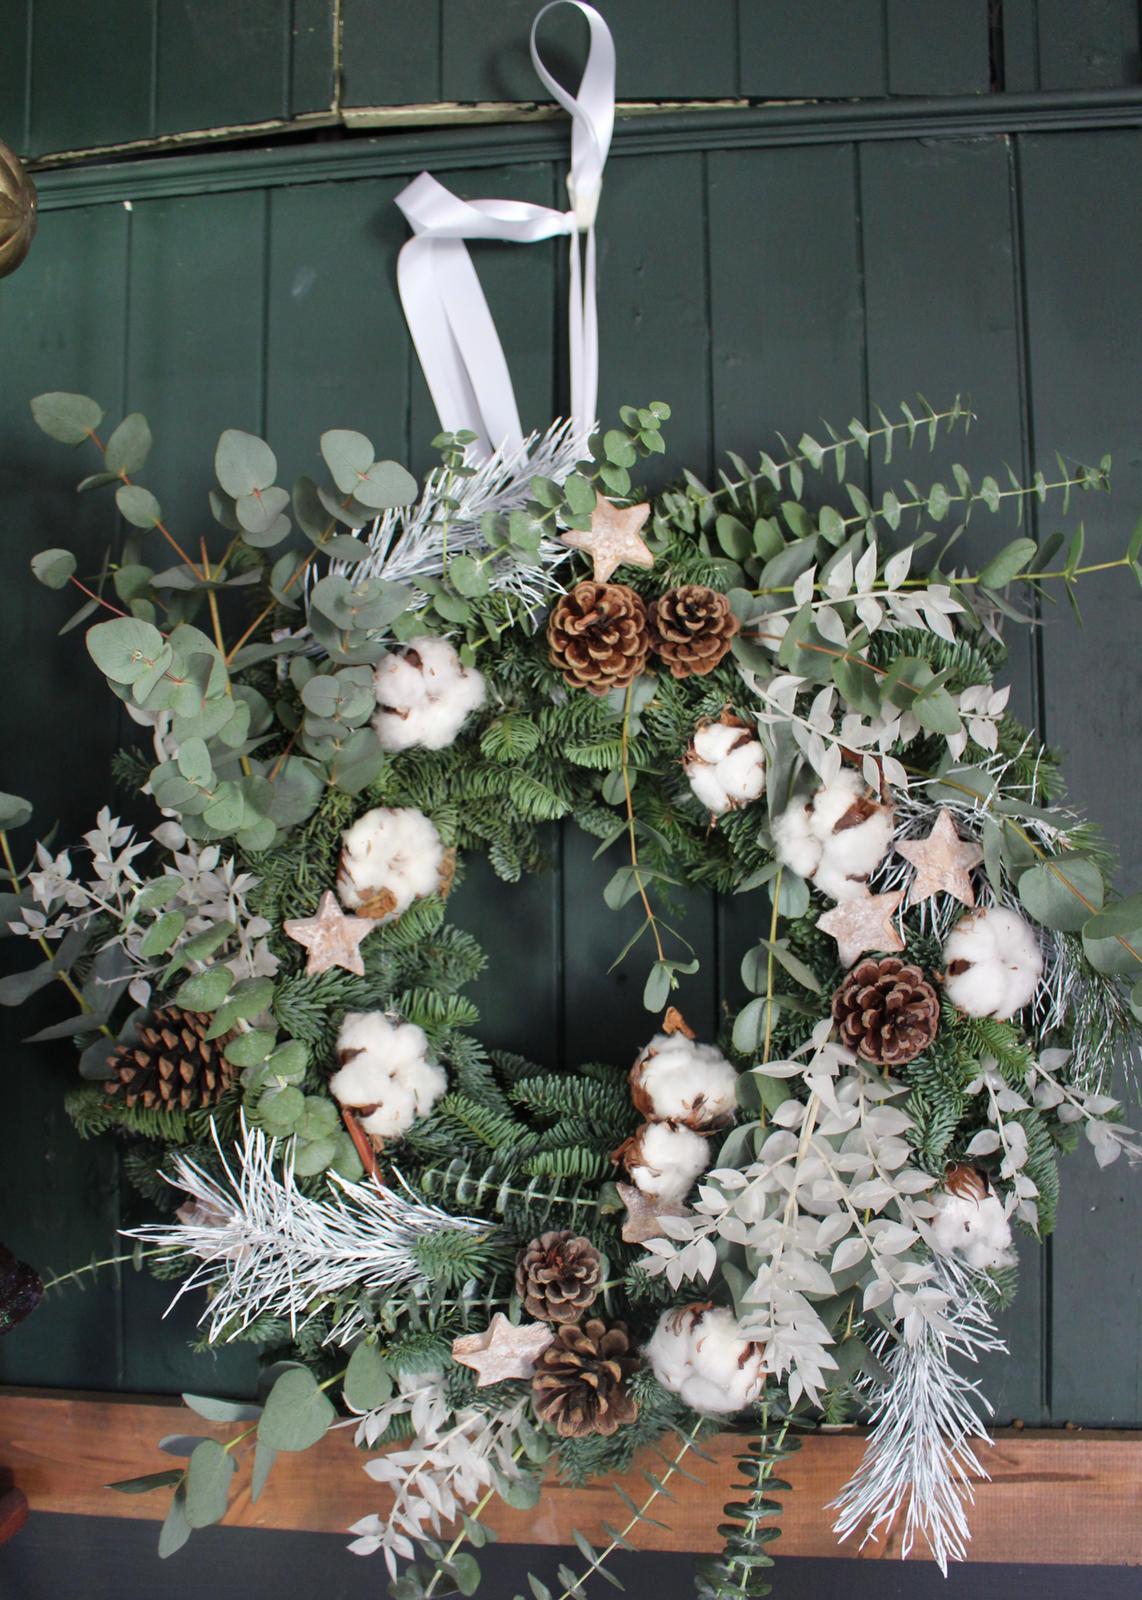 Festive Door Wreath with a Twist